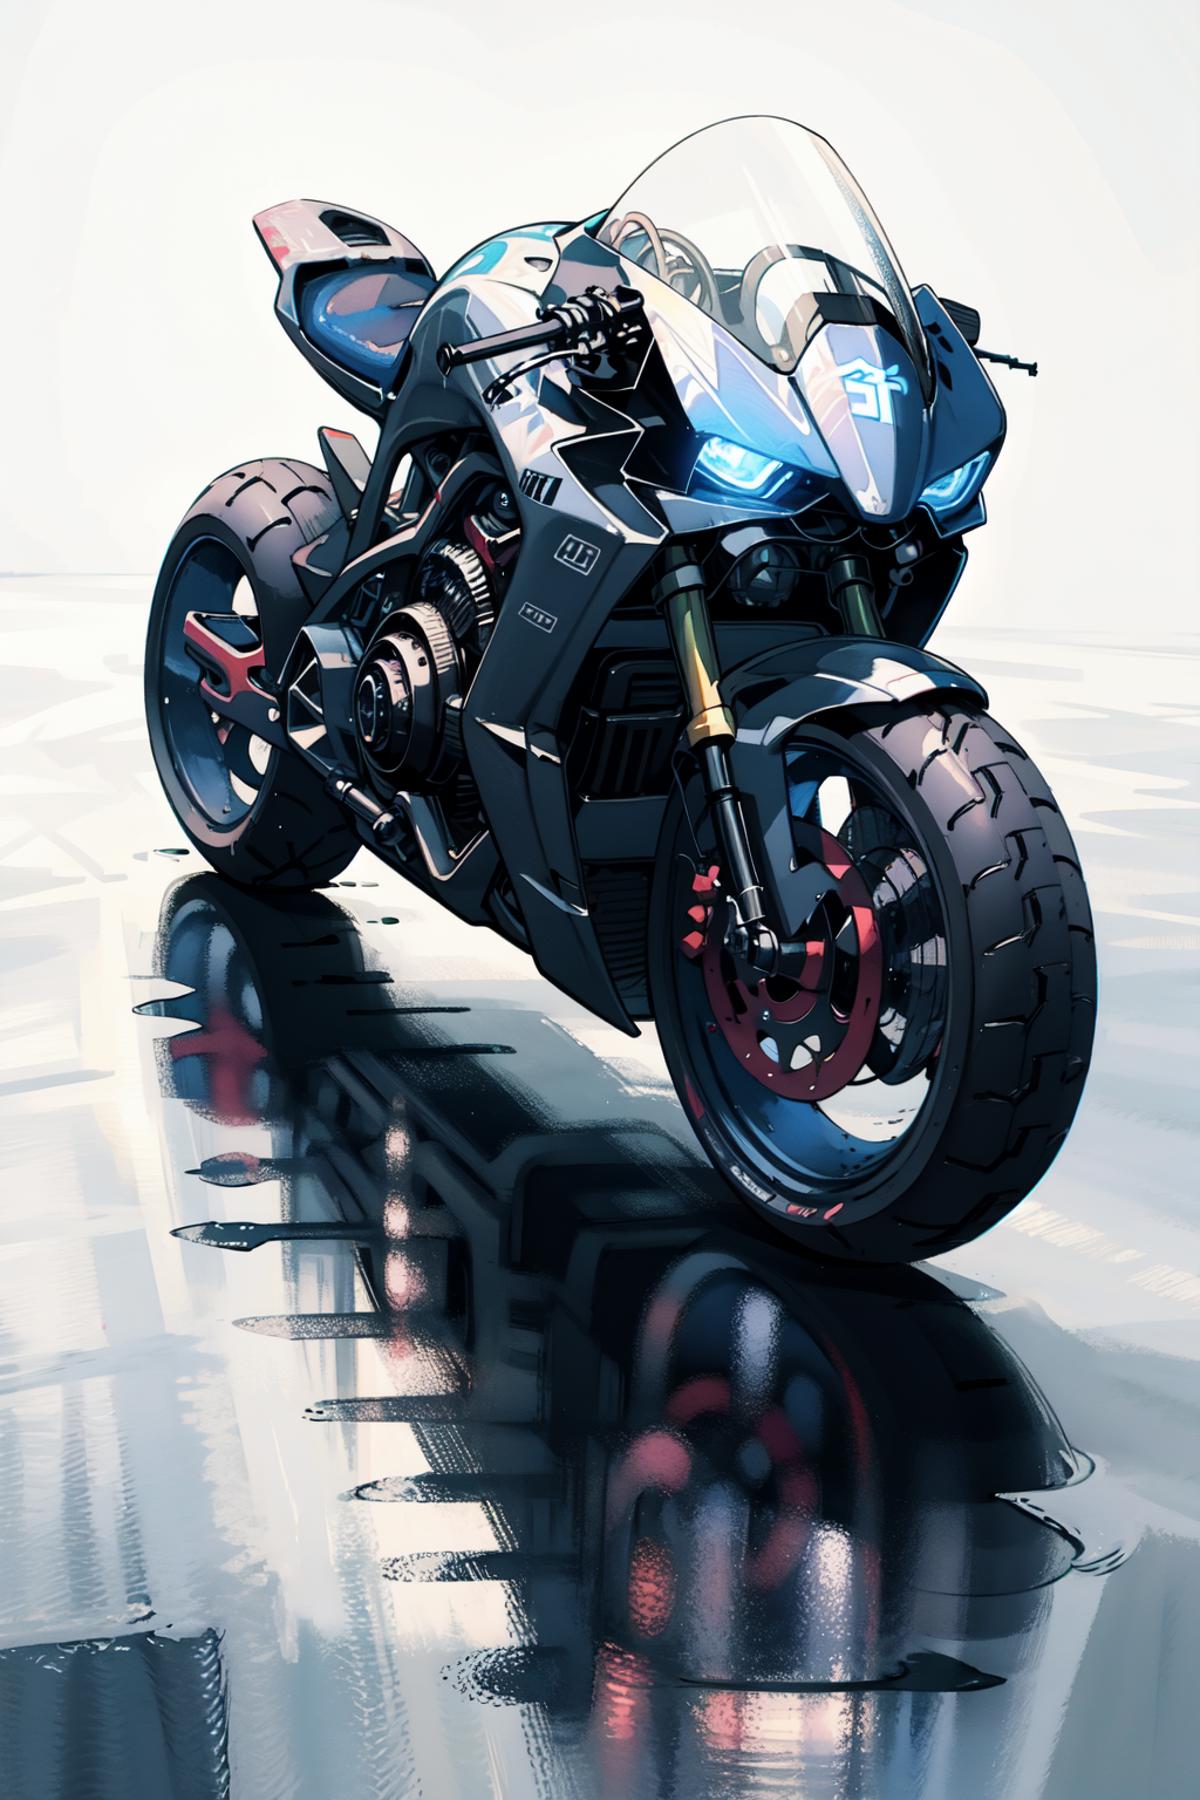 Futuristic Motorcycle Generator Concept image by Junbegun